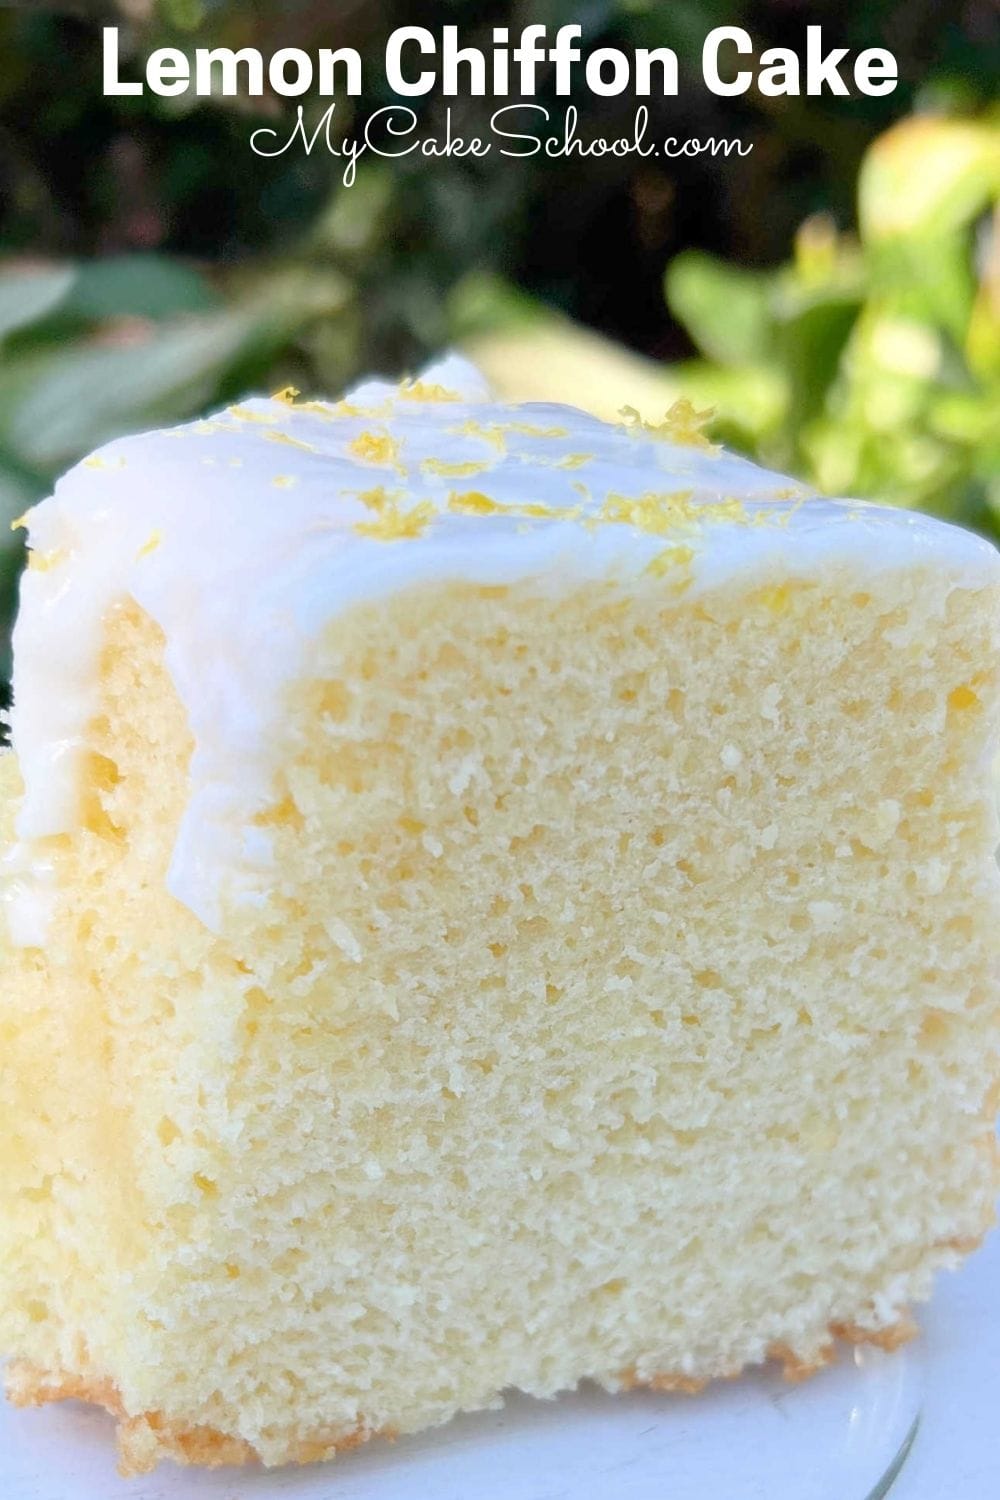 Lemon Chiffon Cake- So light, airy, and delicious!